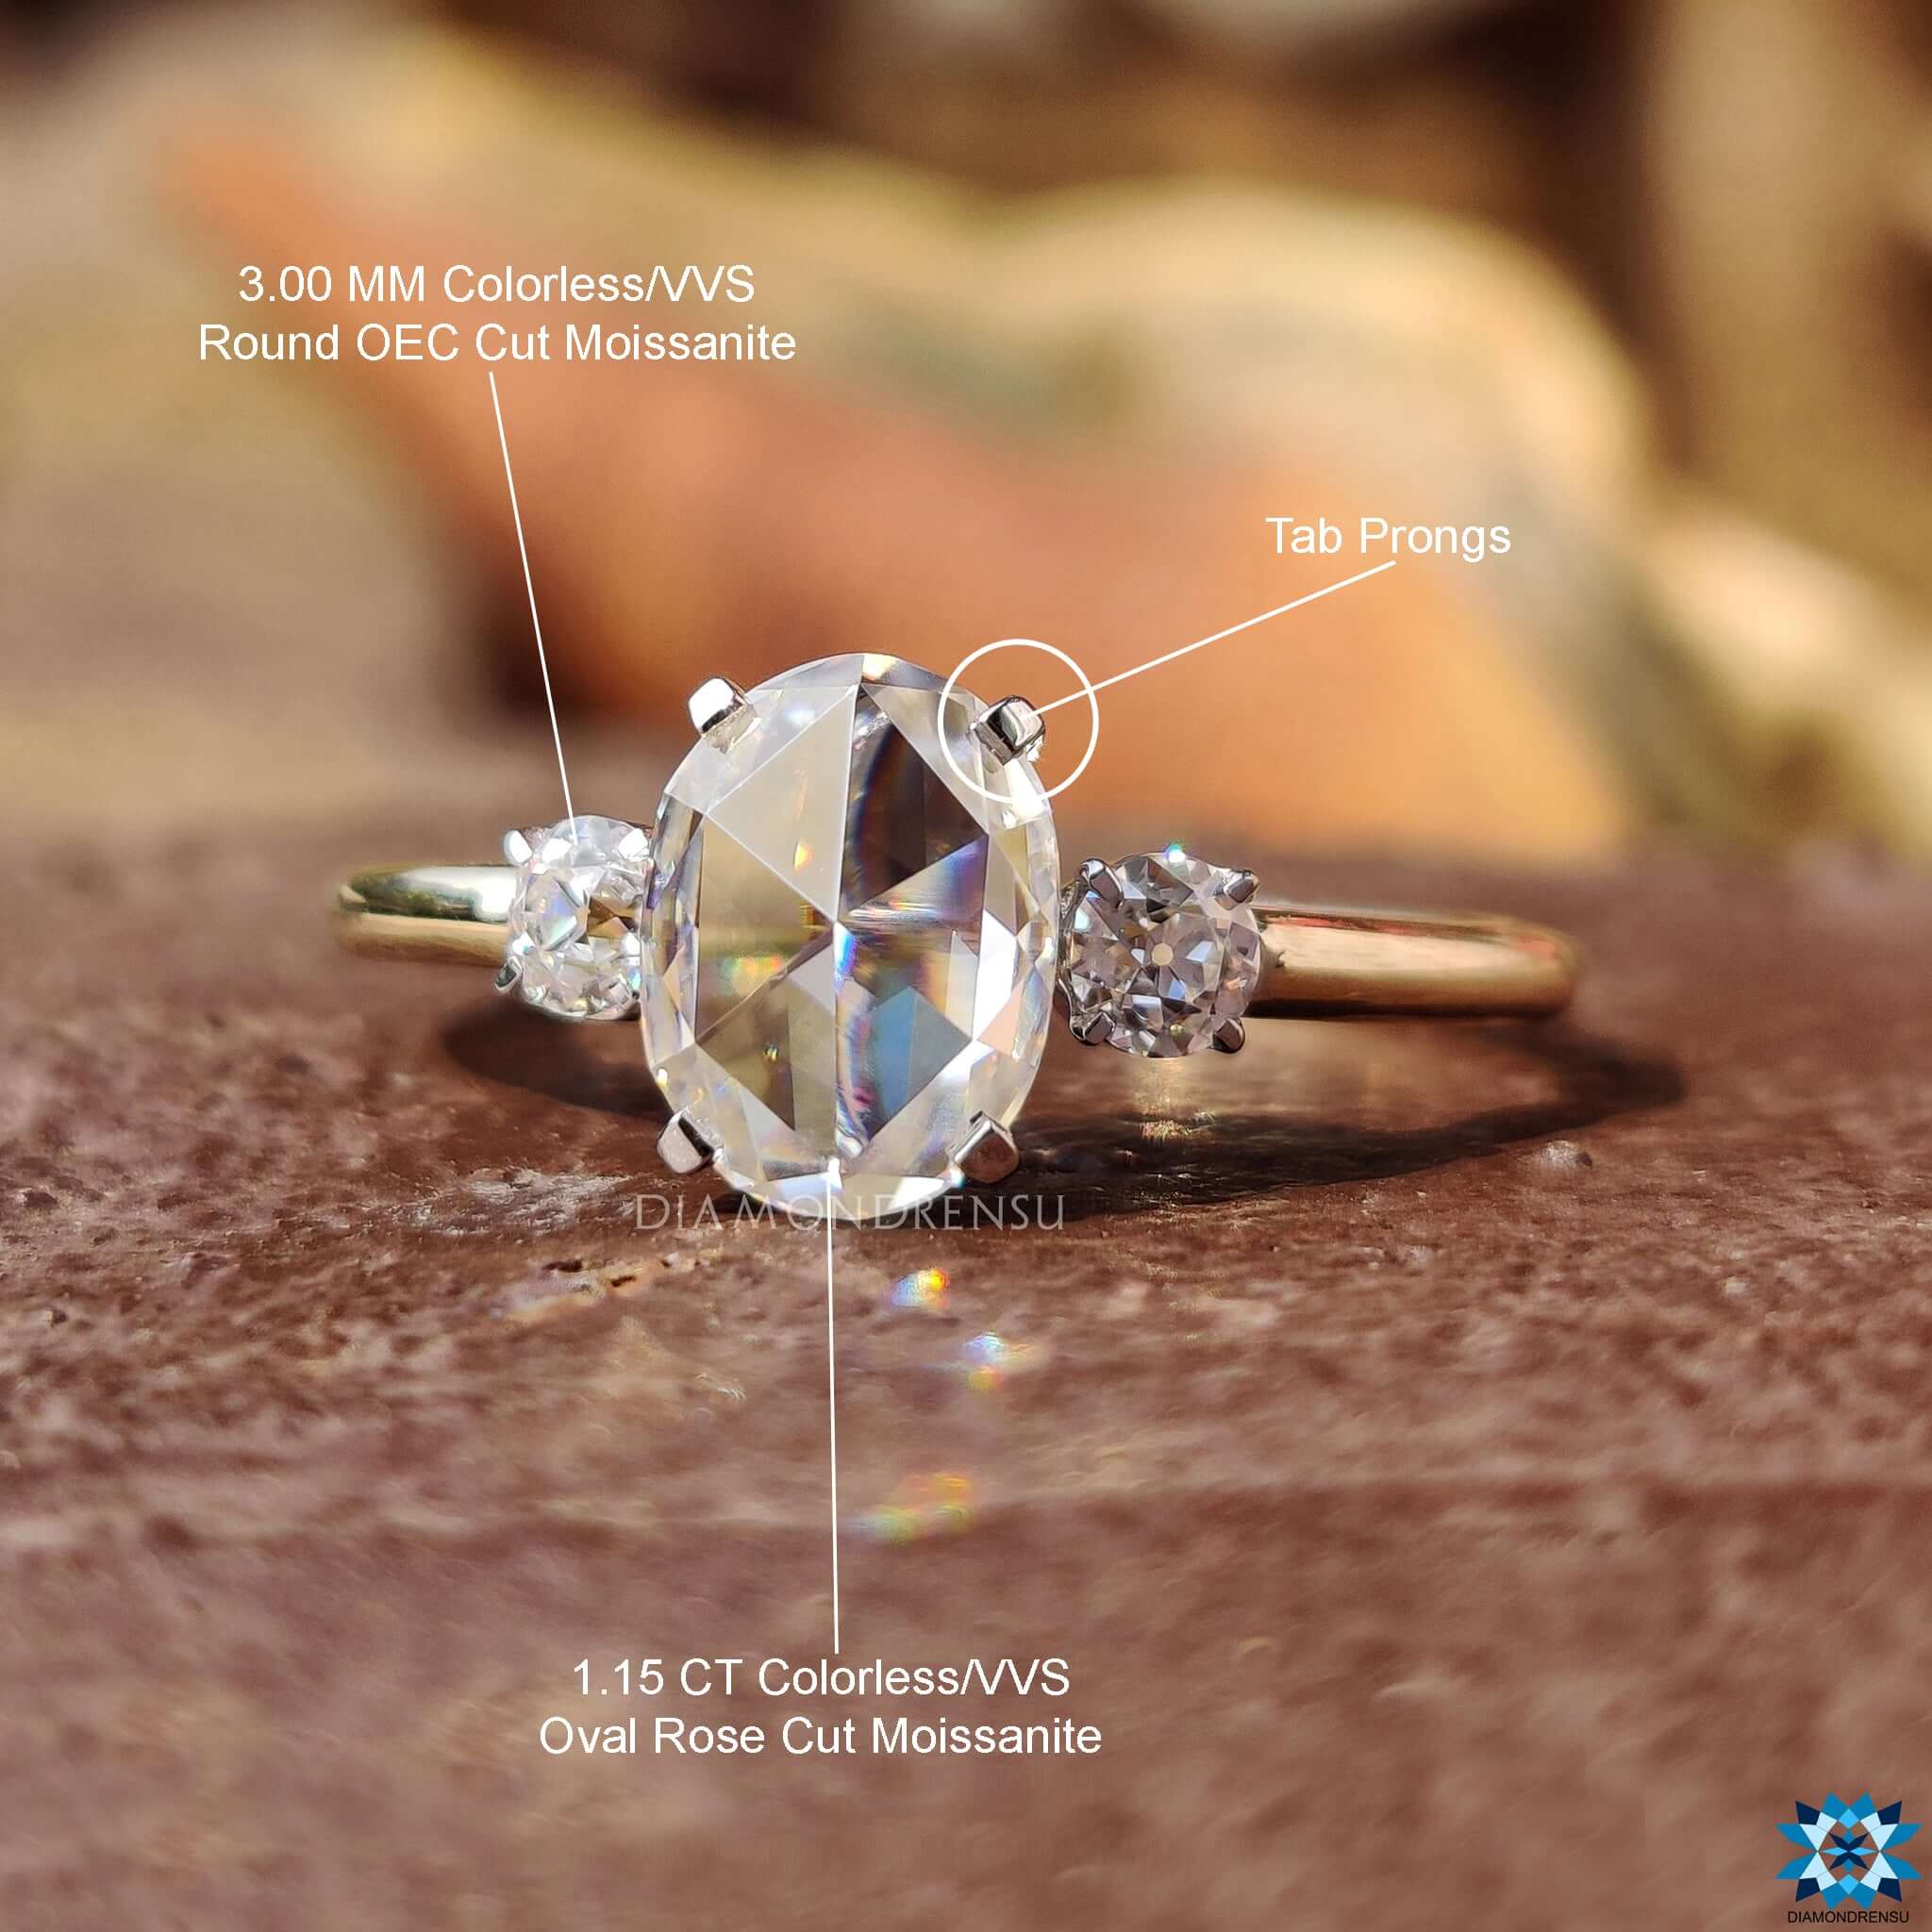 moissanite wedding rings - diamondrensu